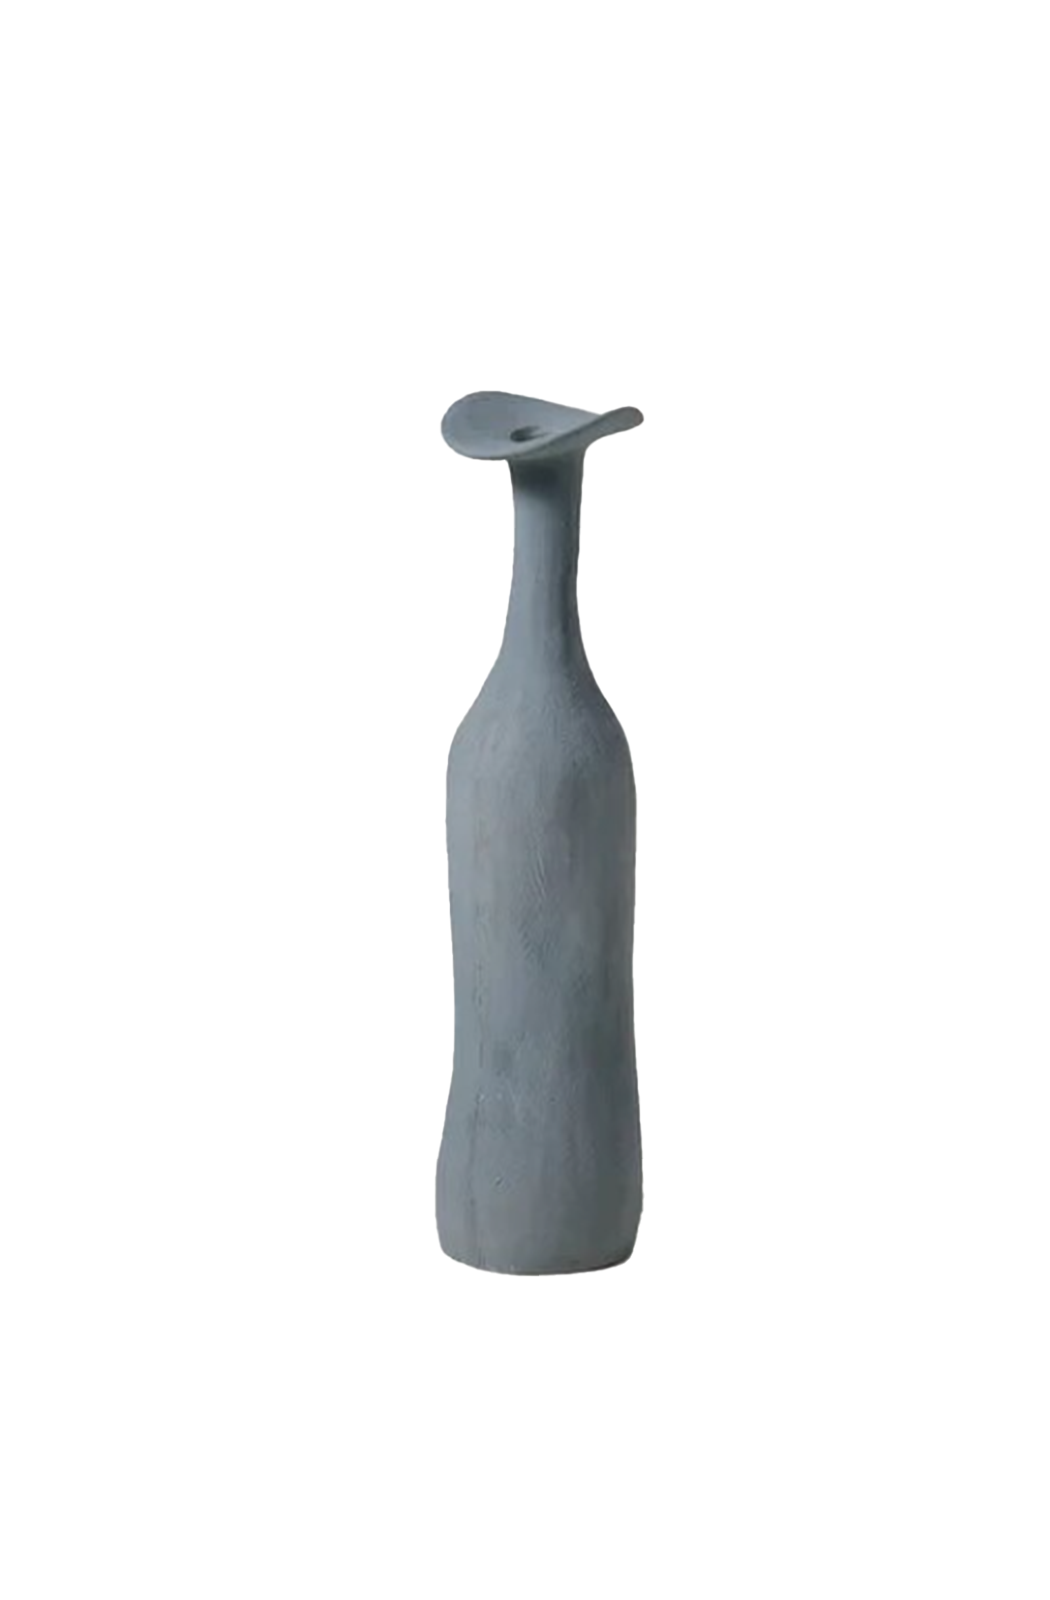 Primitive art ceramic vase